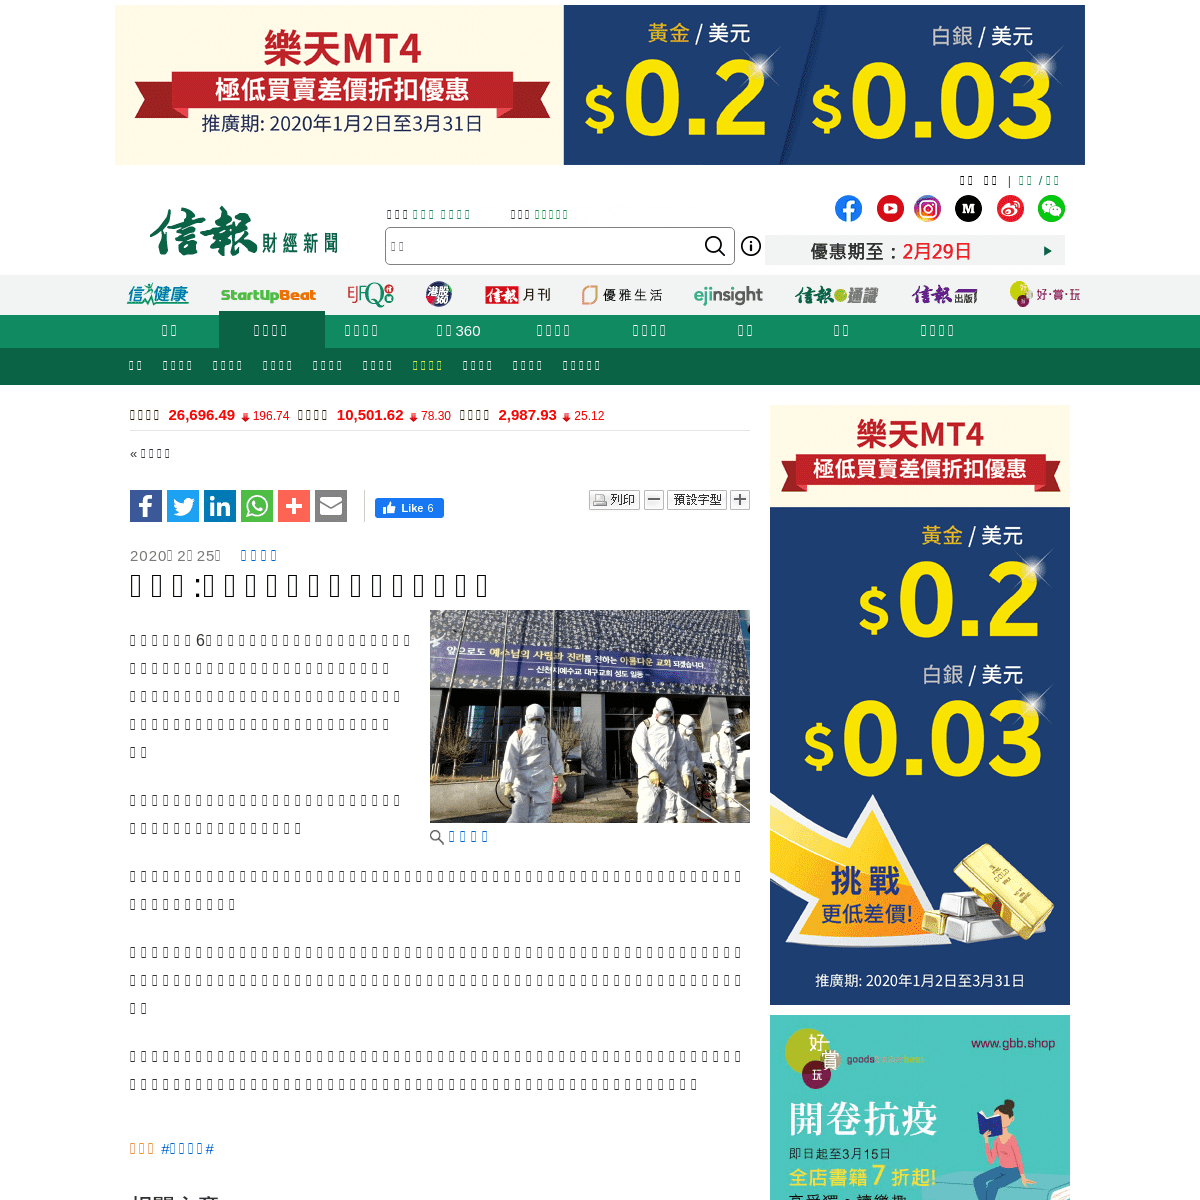 A complete backup of www2.hkej.com/instantnews/current/article/2385296/%E8%A2%81%E5%9C%8B%E5%8B%87%3A%E7%A6%81%E6%AD%A2%E5%8D%97